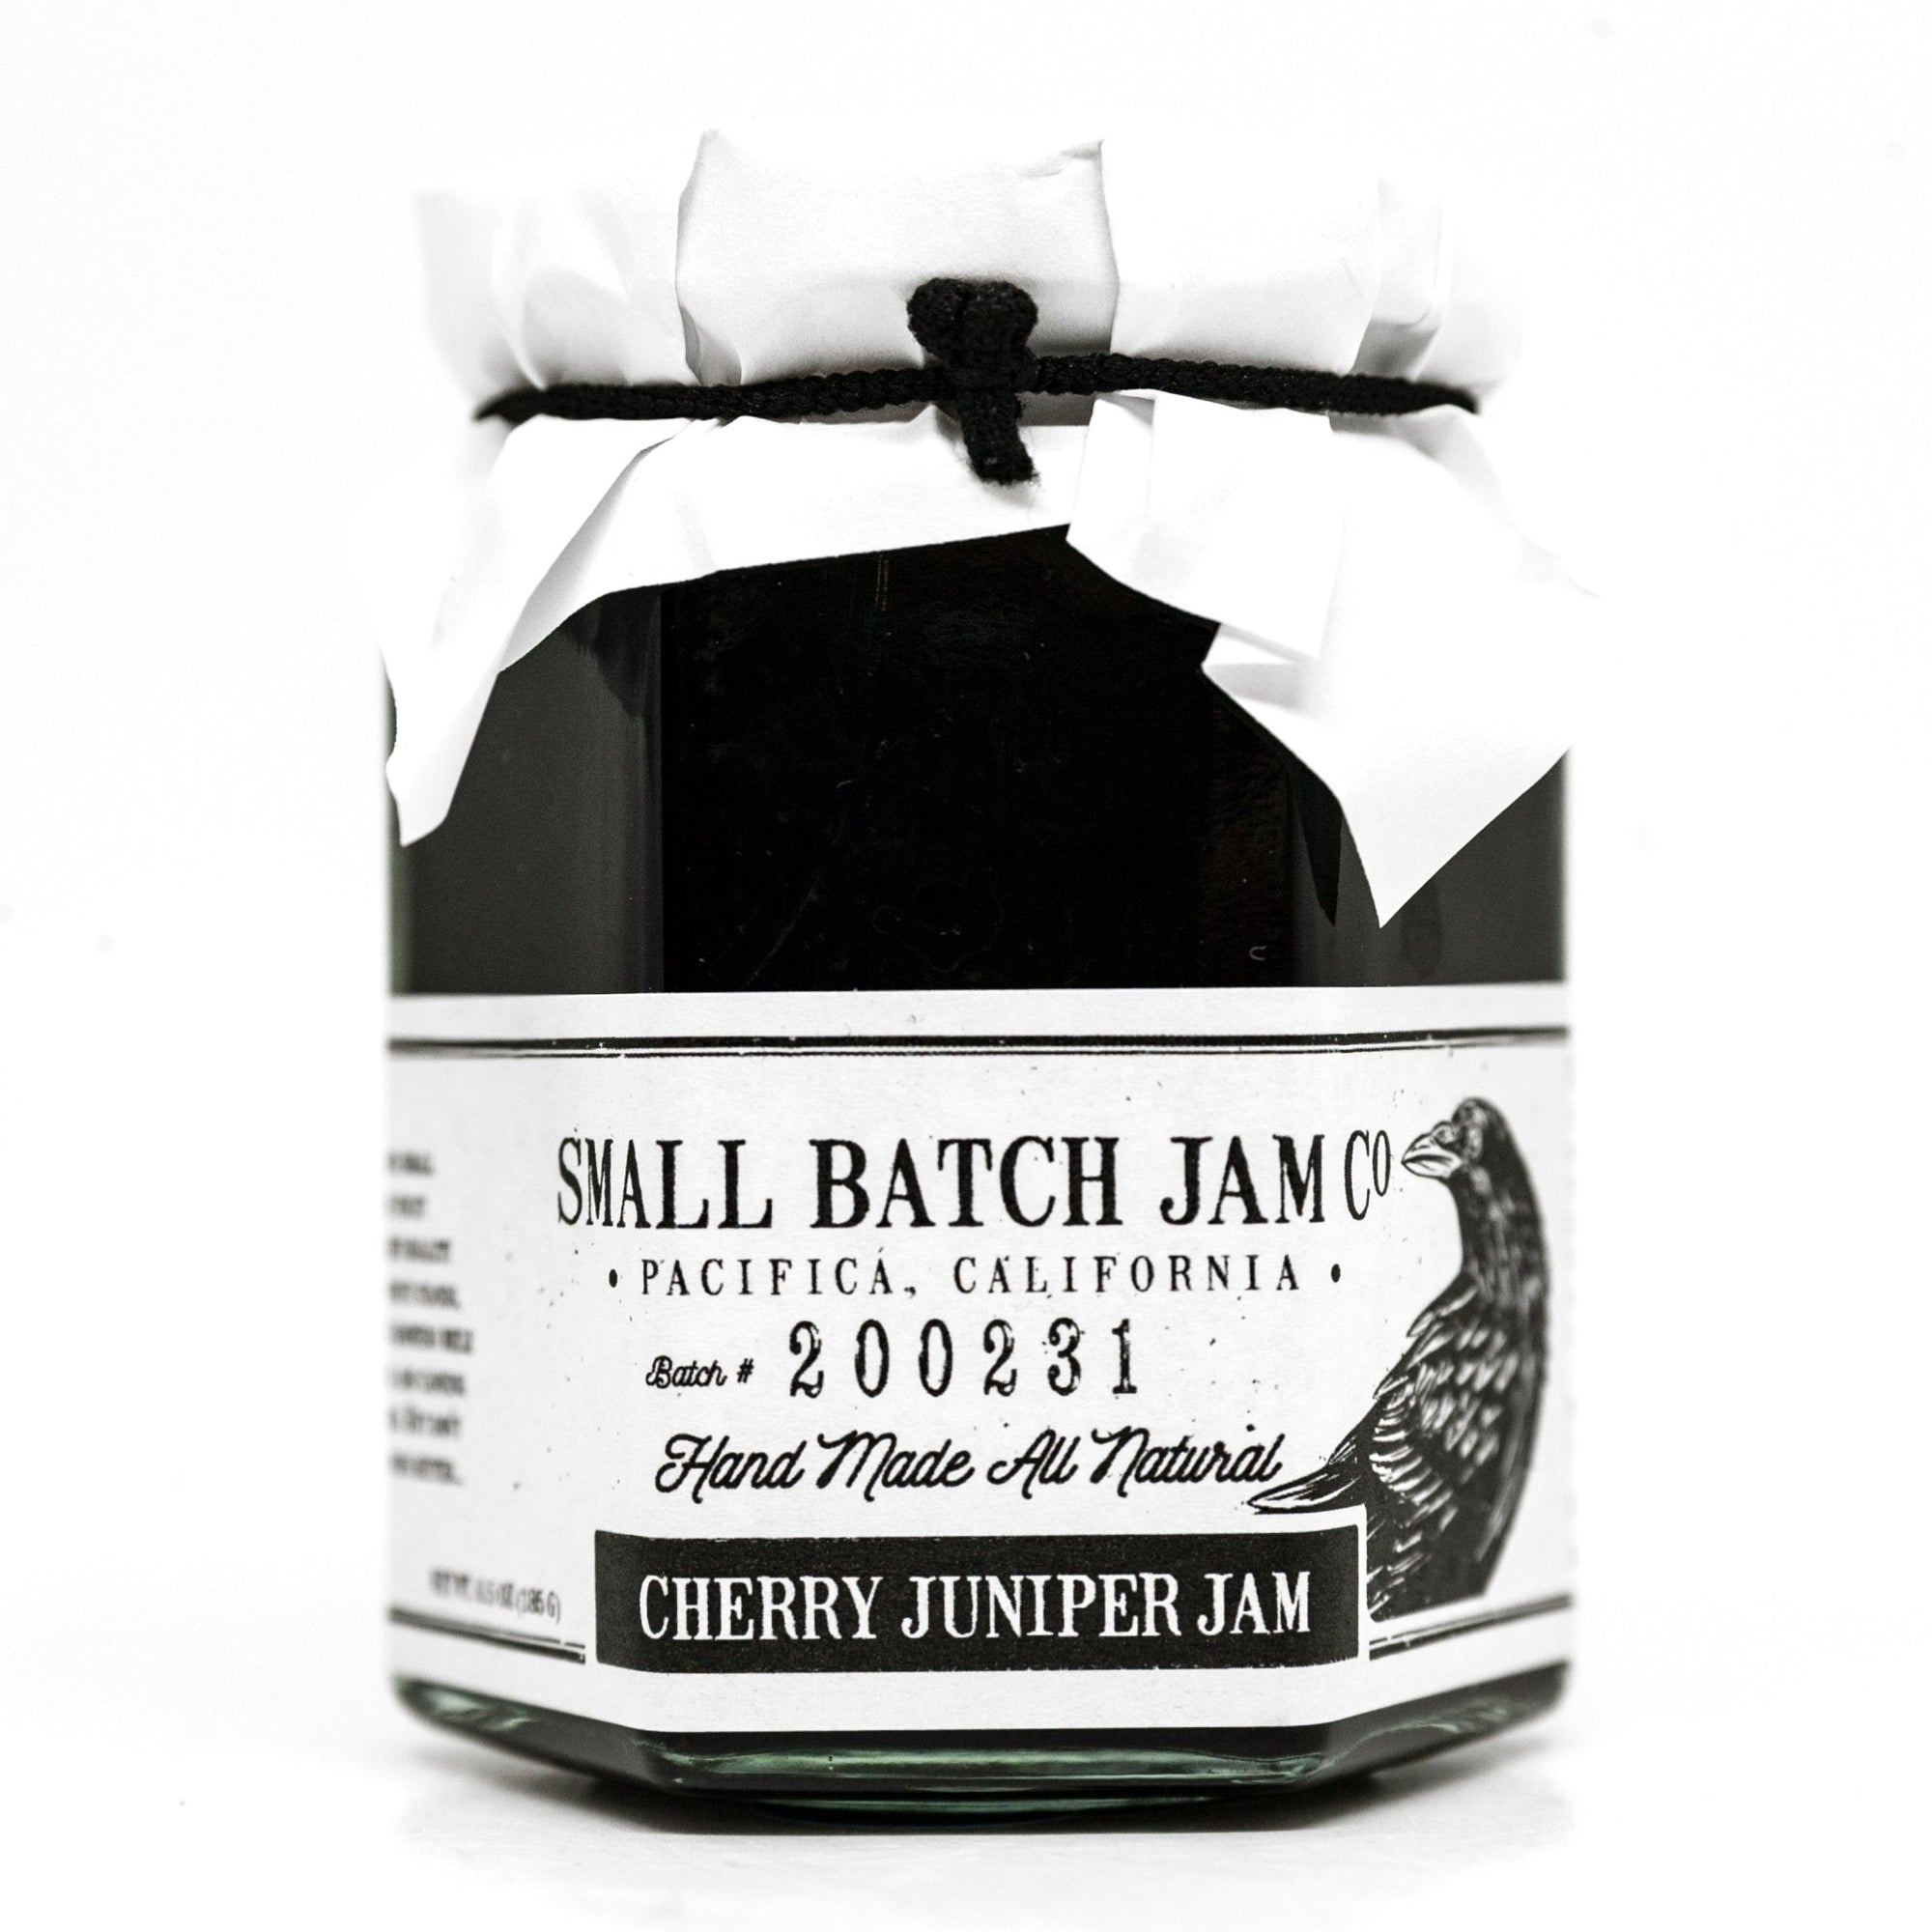 Cherry Juniper Jam - Small Batch Jam Co